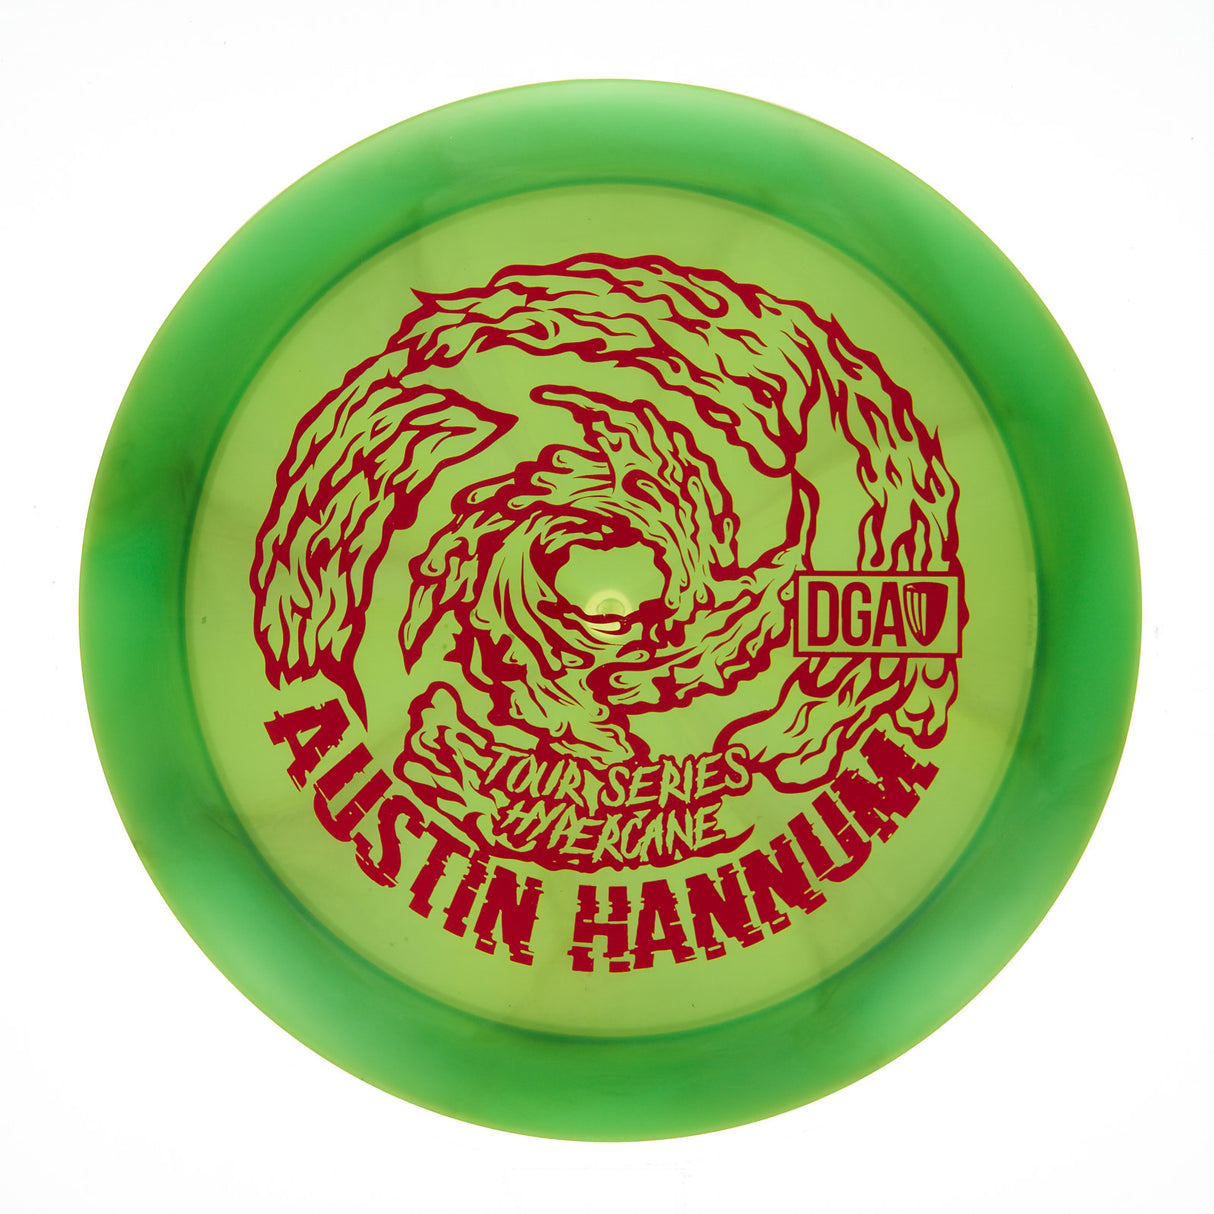 DGA Hypercane - Austin Hannum Tour Series Swirl 177g | Style 0003